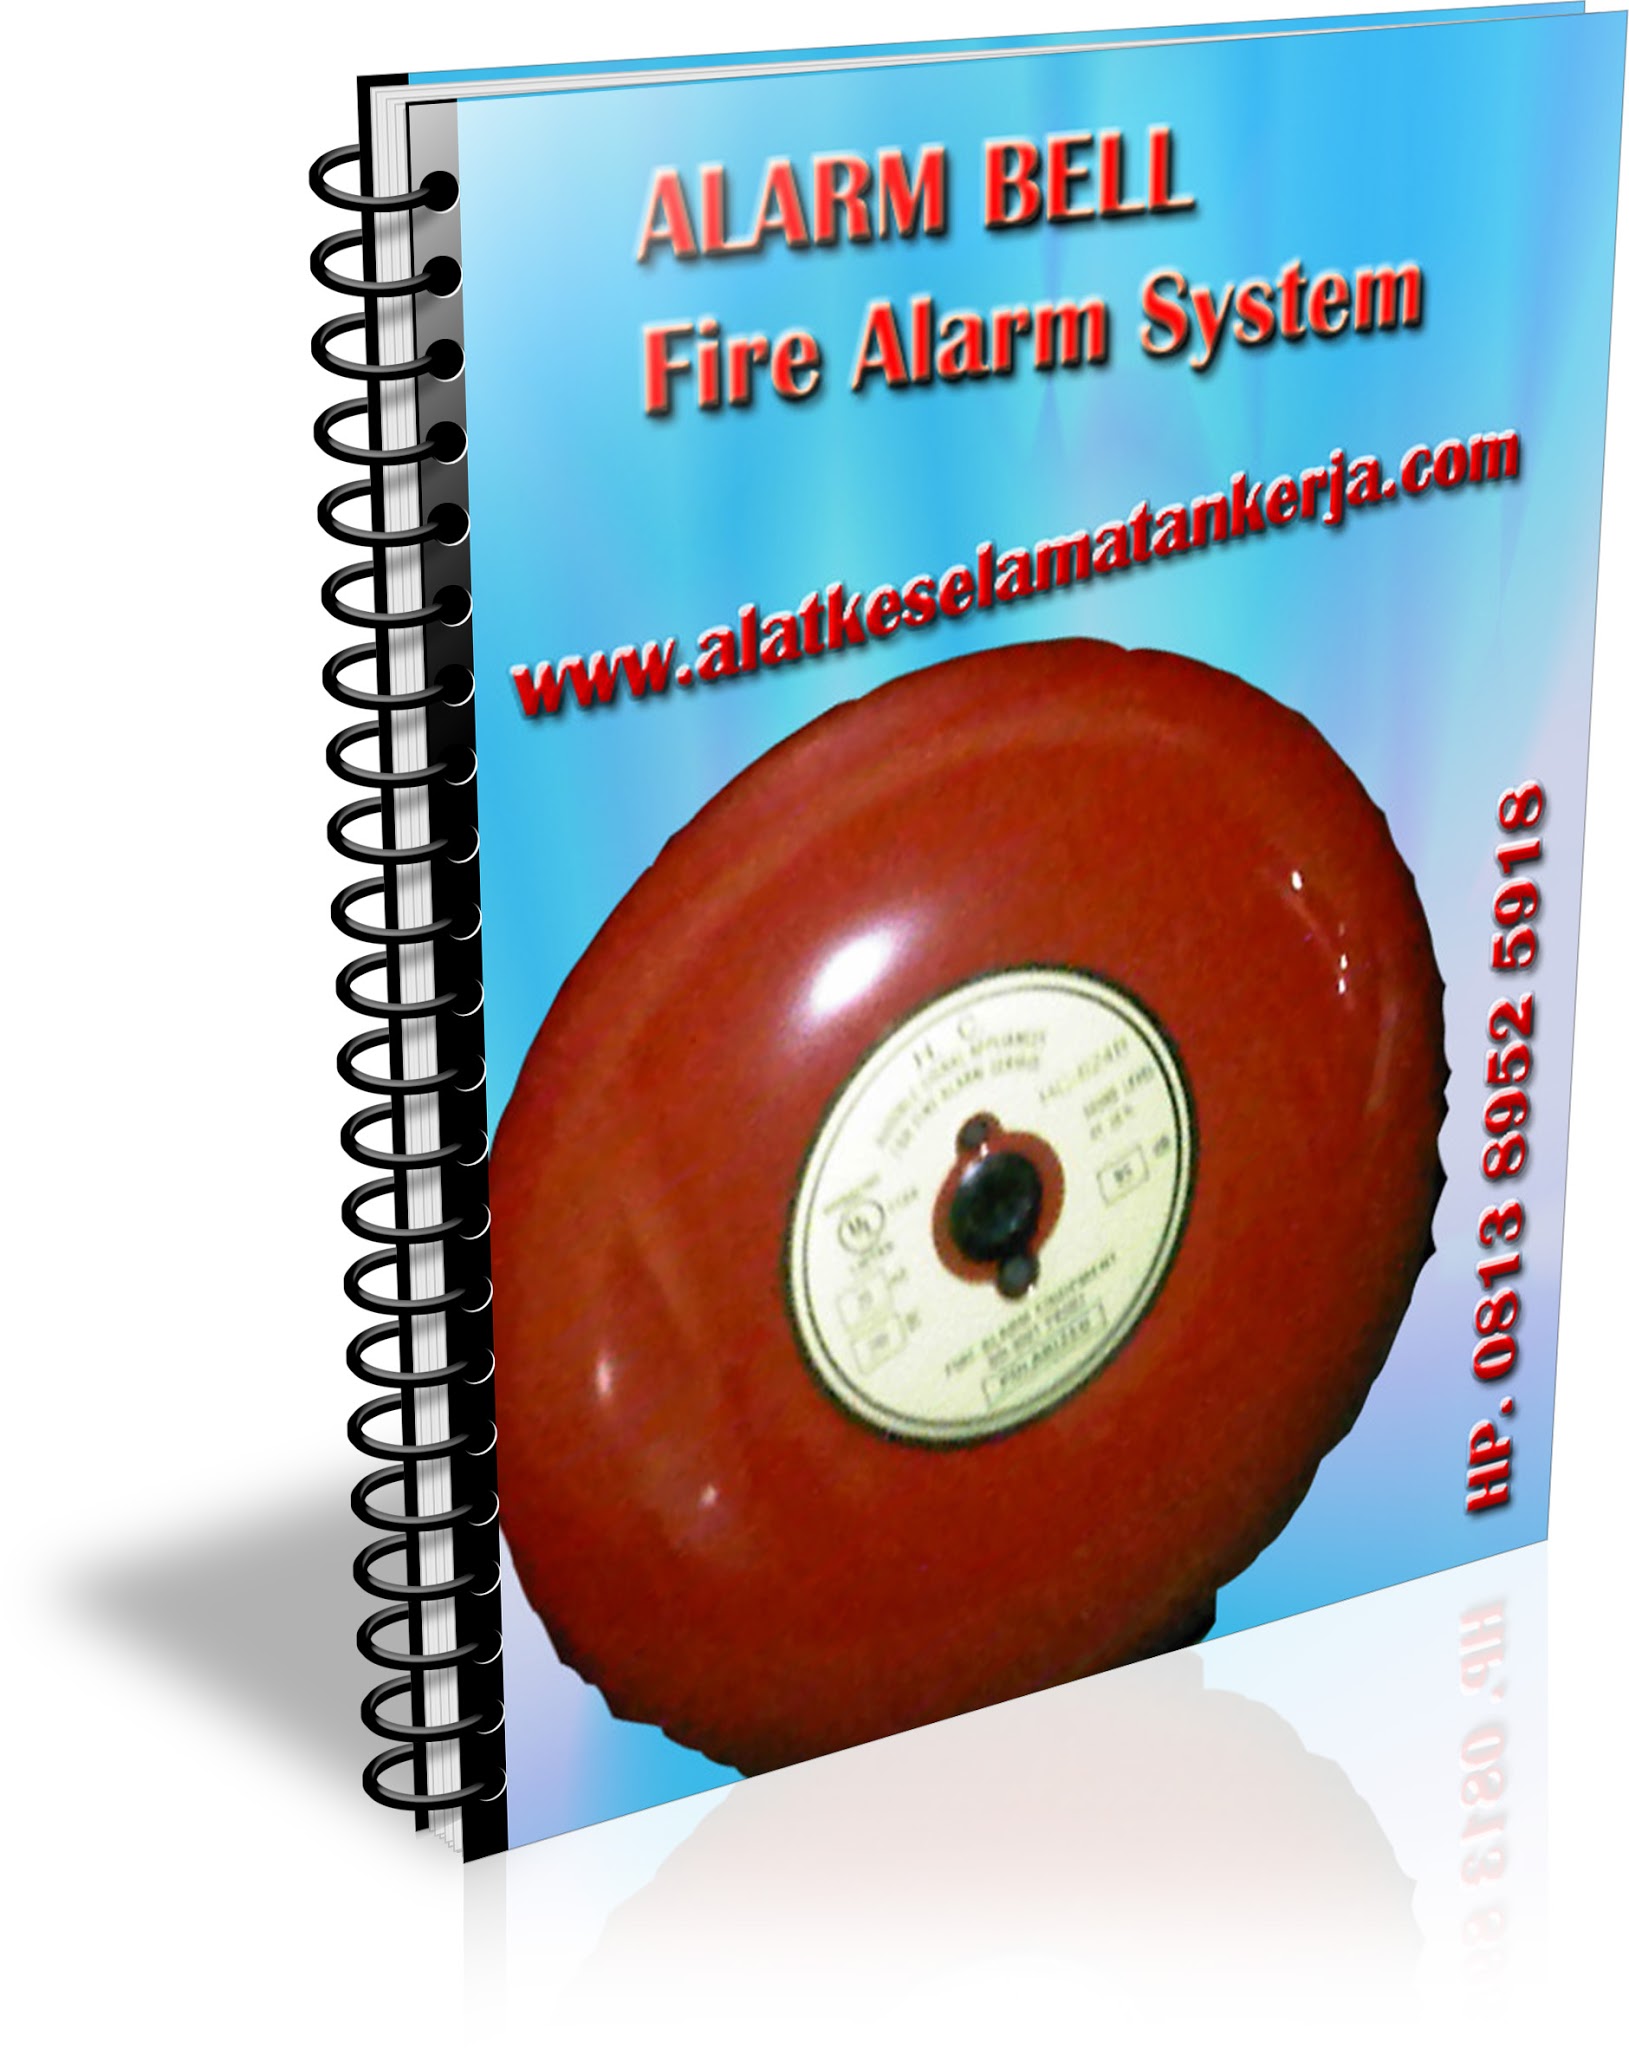 detektor asap, alarm n, alarm kecil, fungsi fire alarm system, smoke detector 12v, alarm bell 220v, alarm gsm system, alarm bell 24vdc, premier texecom, alarm bts